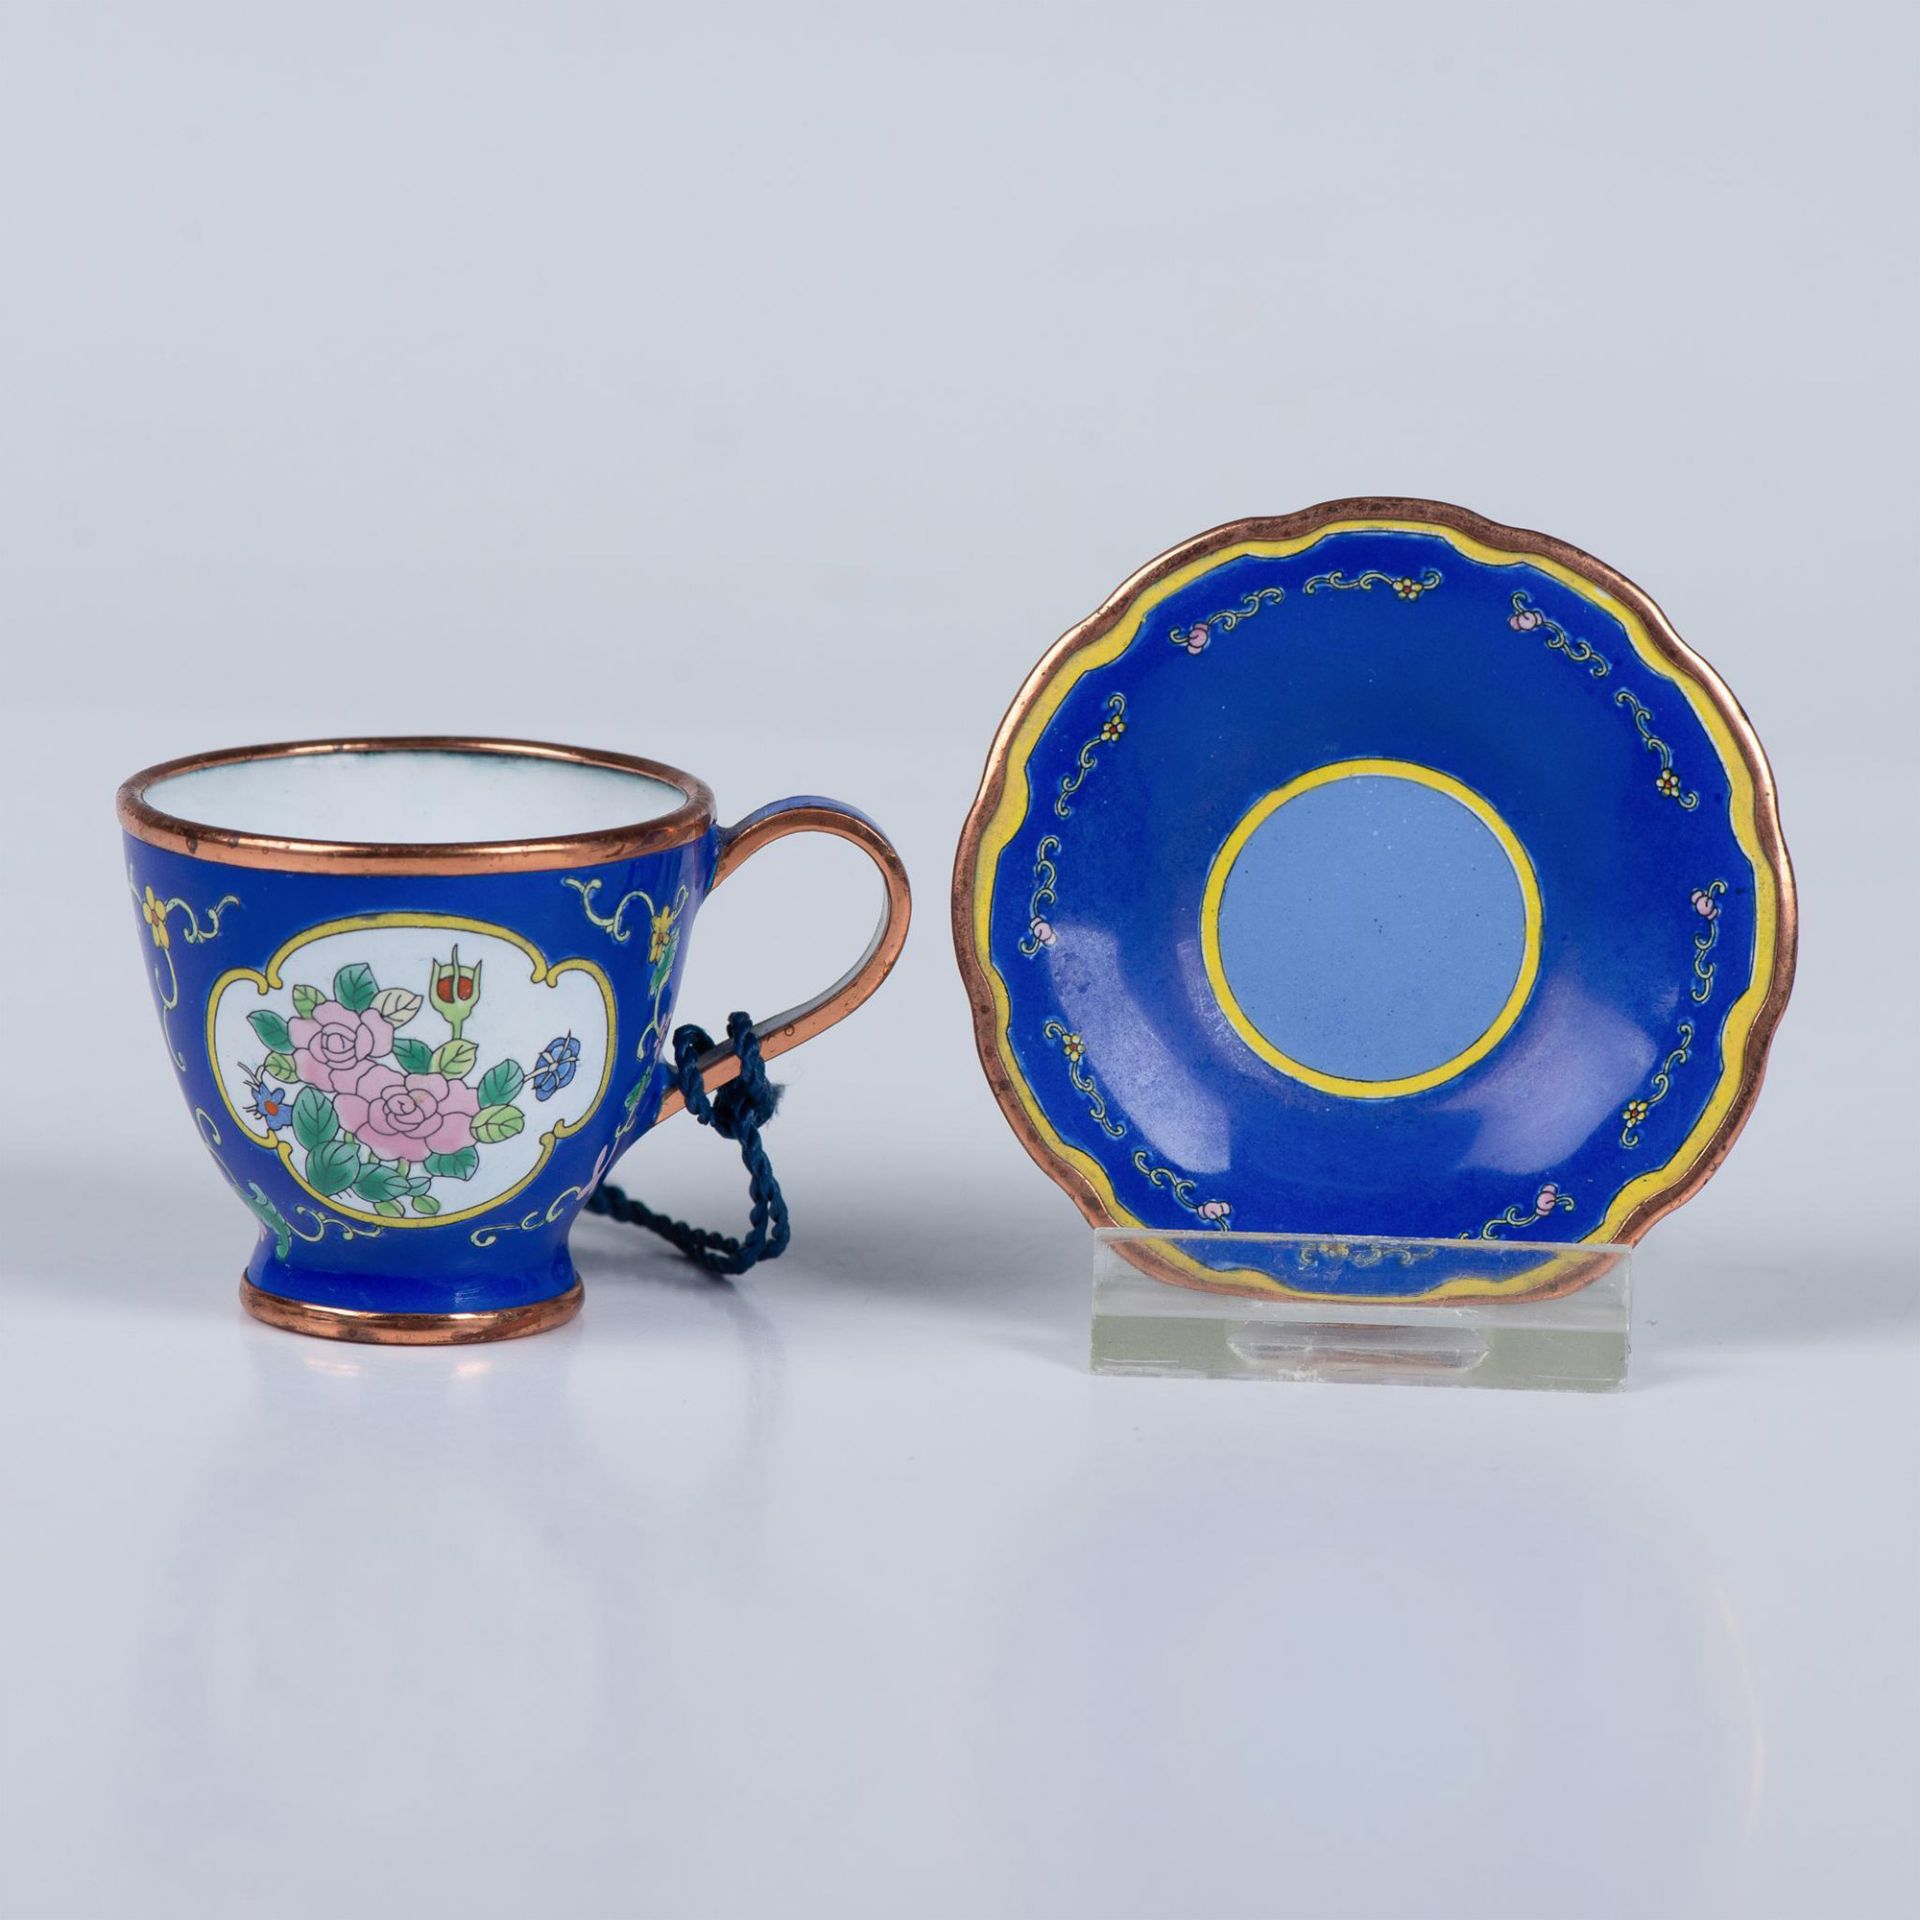 2pc Charlotte di Vita Miniature Teacup and Saucer - Image 4 of 6